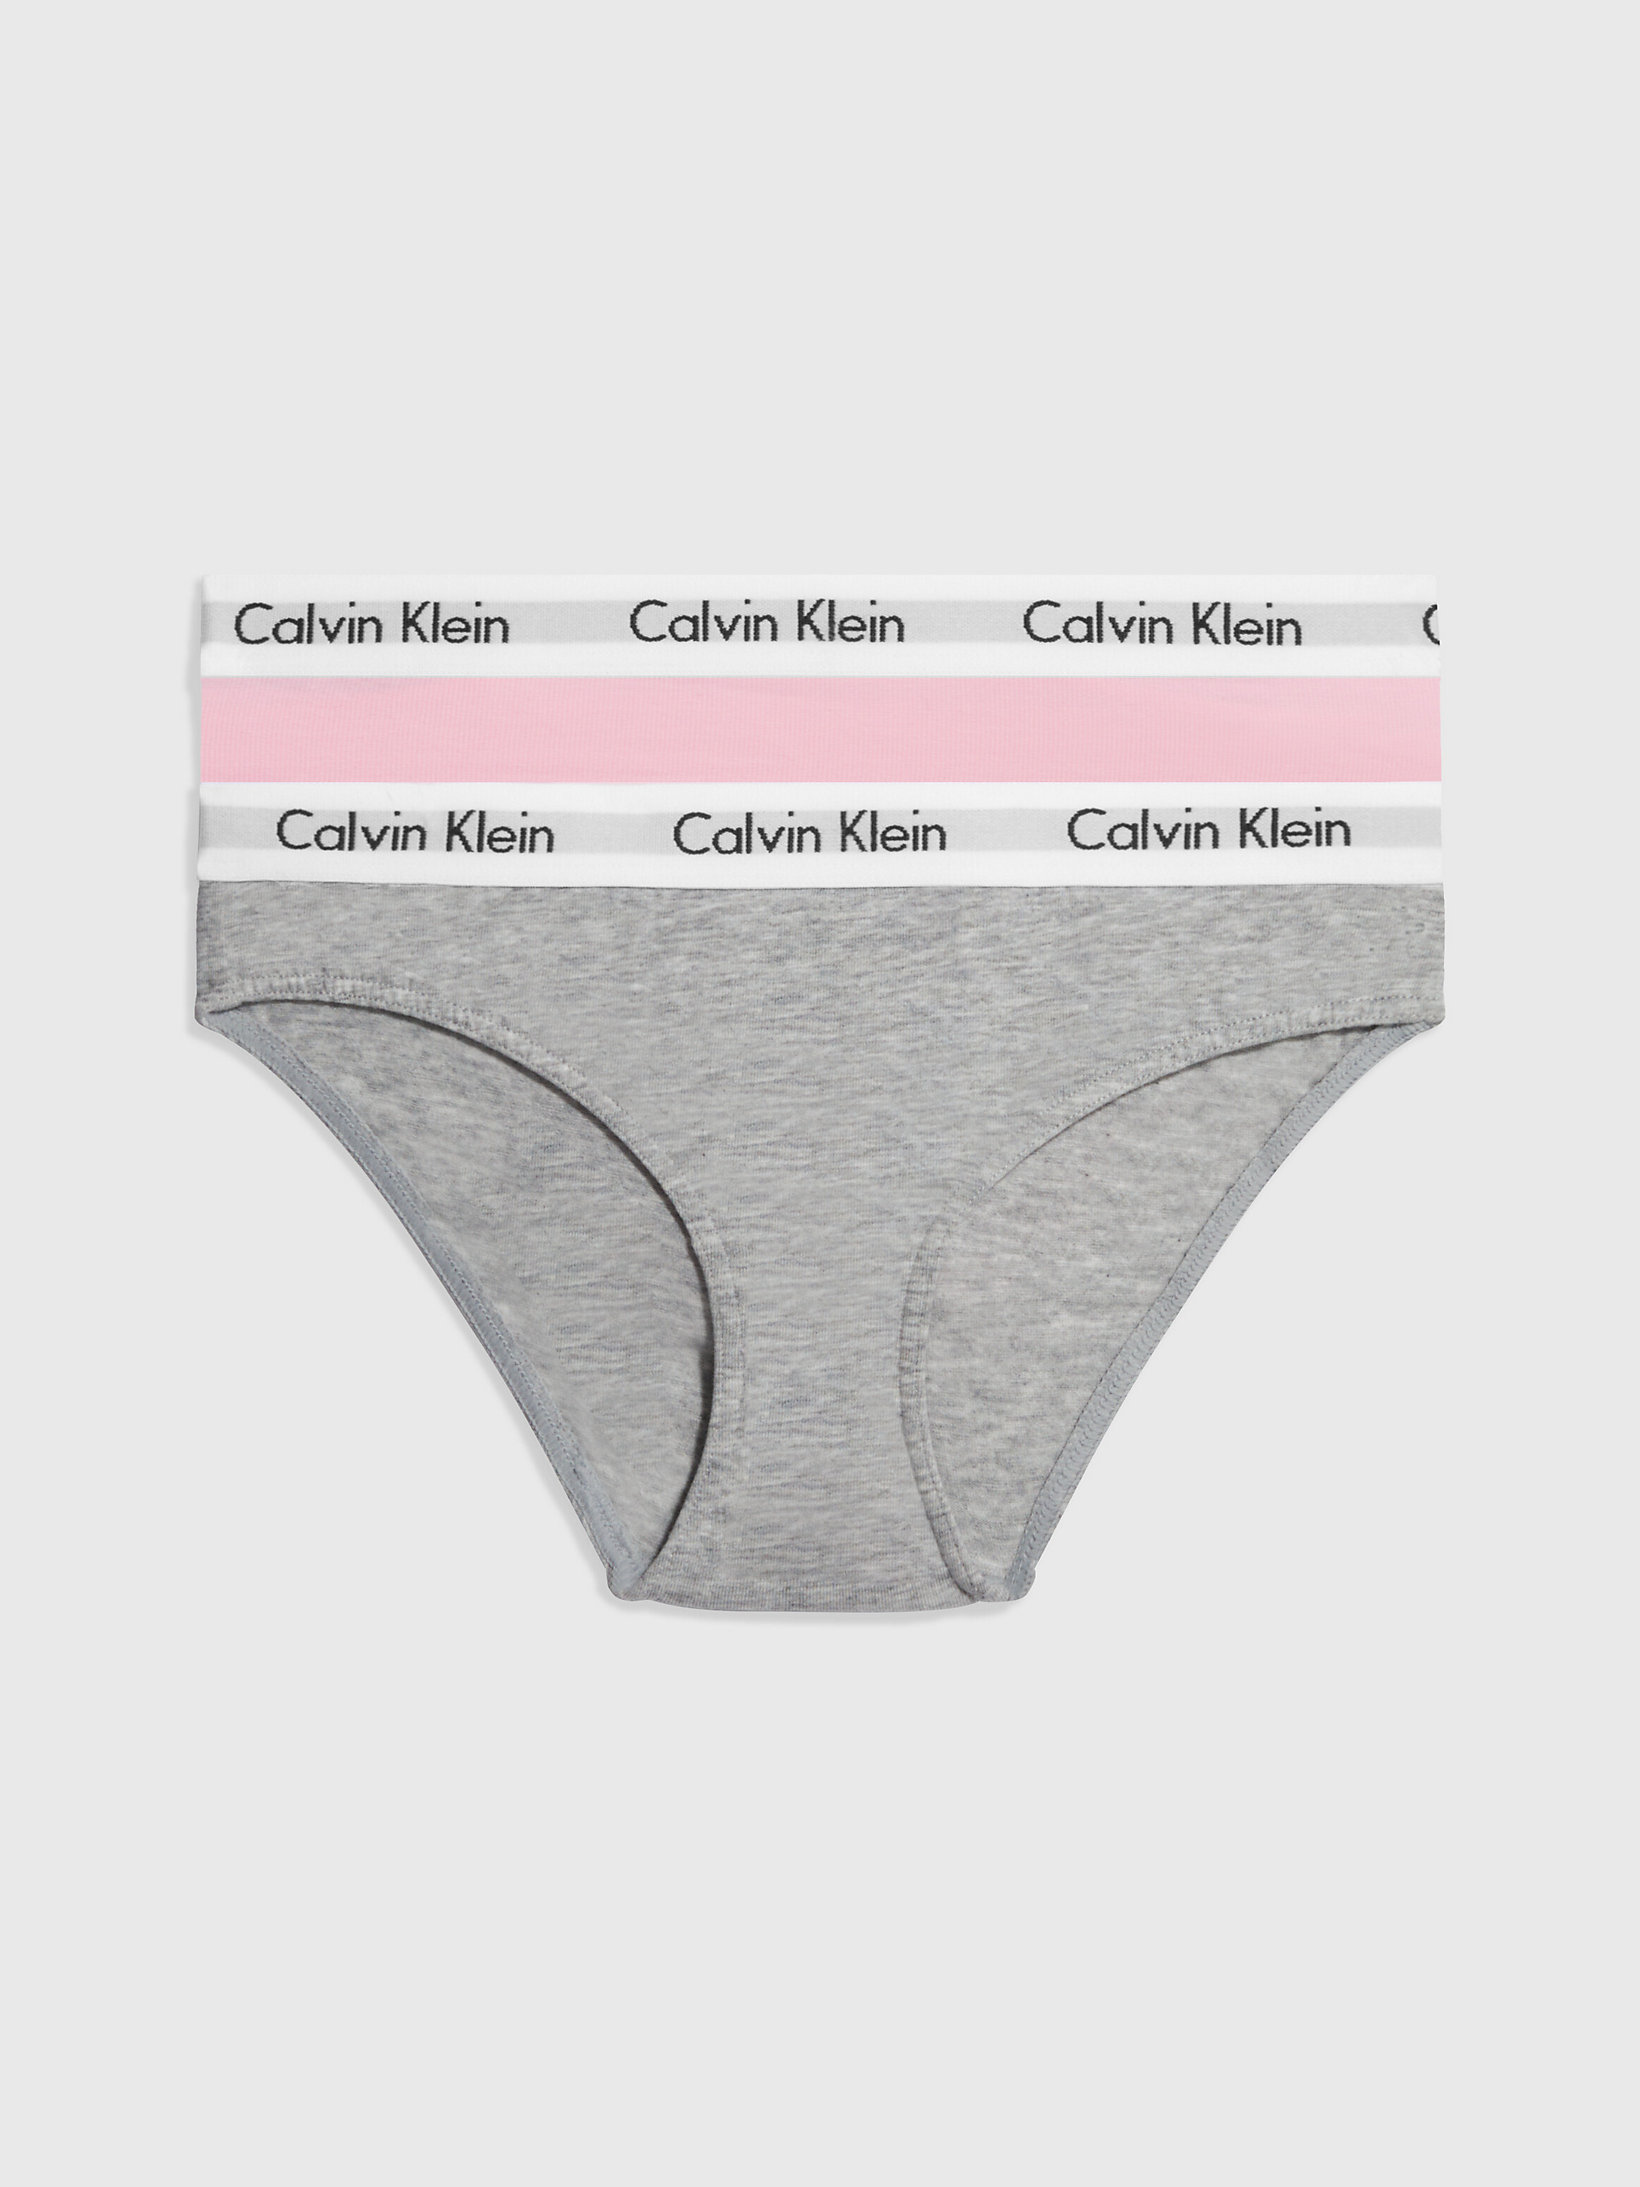 Grey Htr/unique > Комплект слипов 2 шт. для девочек - Modern Cotton > undefined девочки - Calvin Klein